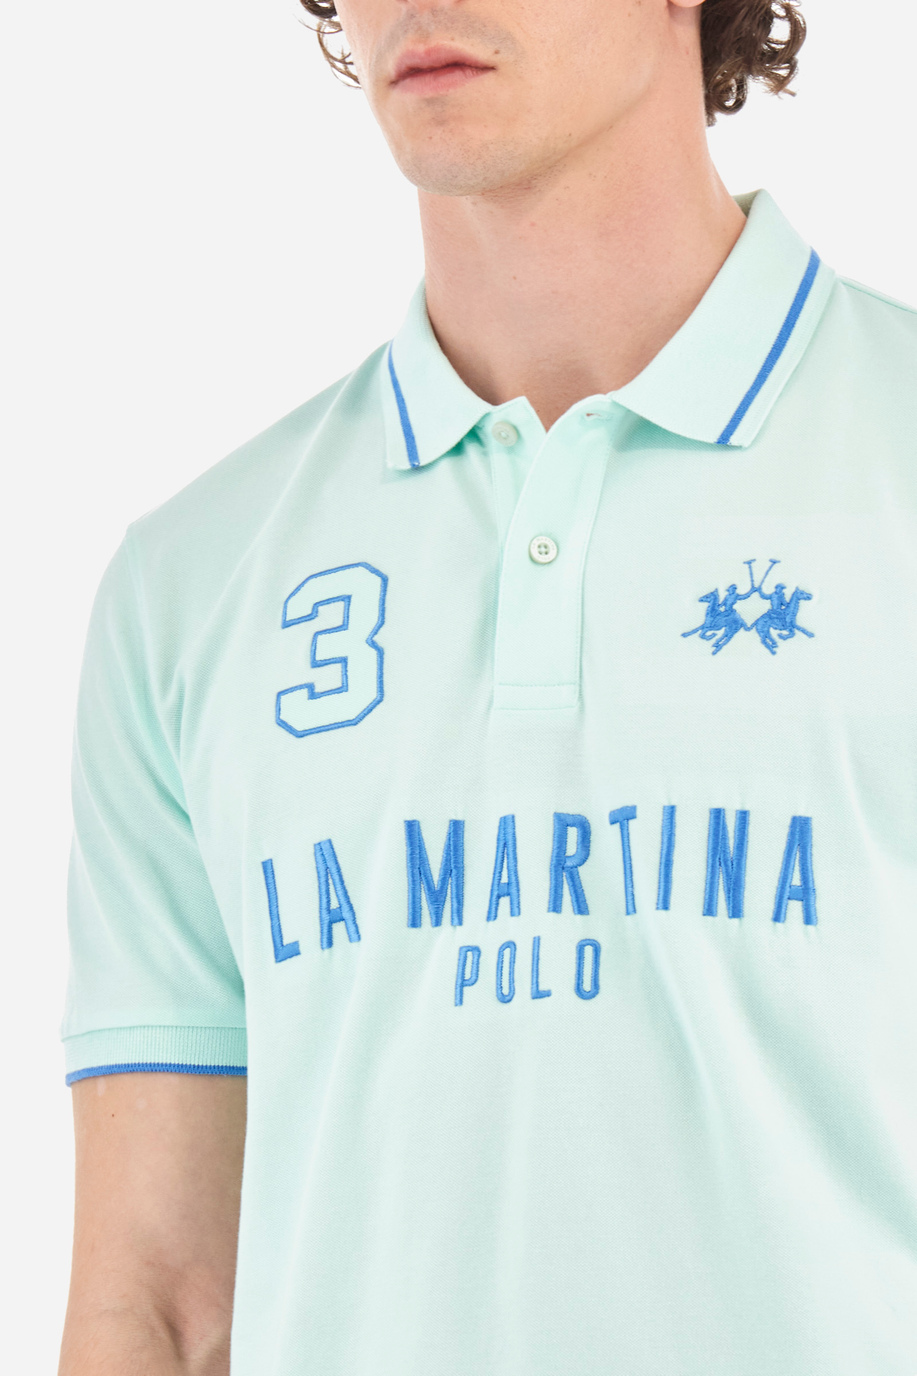 Polo coupe classique en coton stretch - Yeshayahu - Polos | La Martina - Official Online Shop